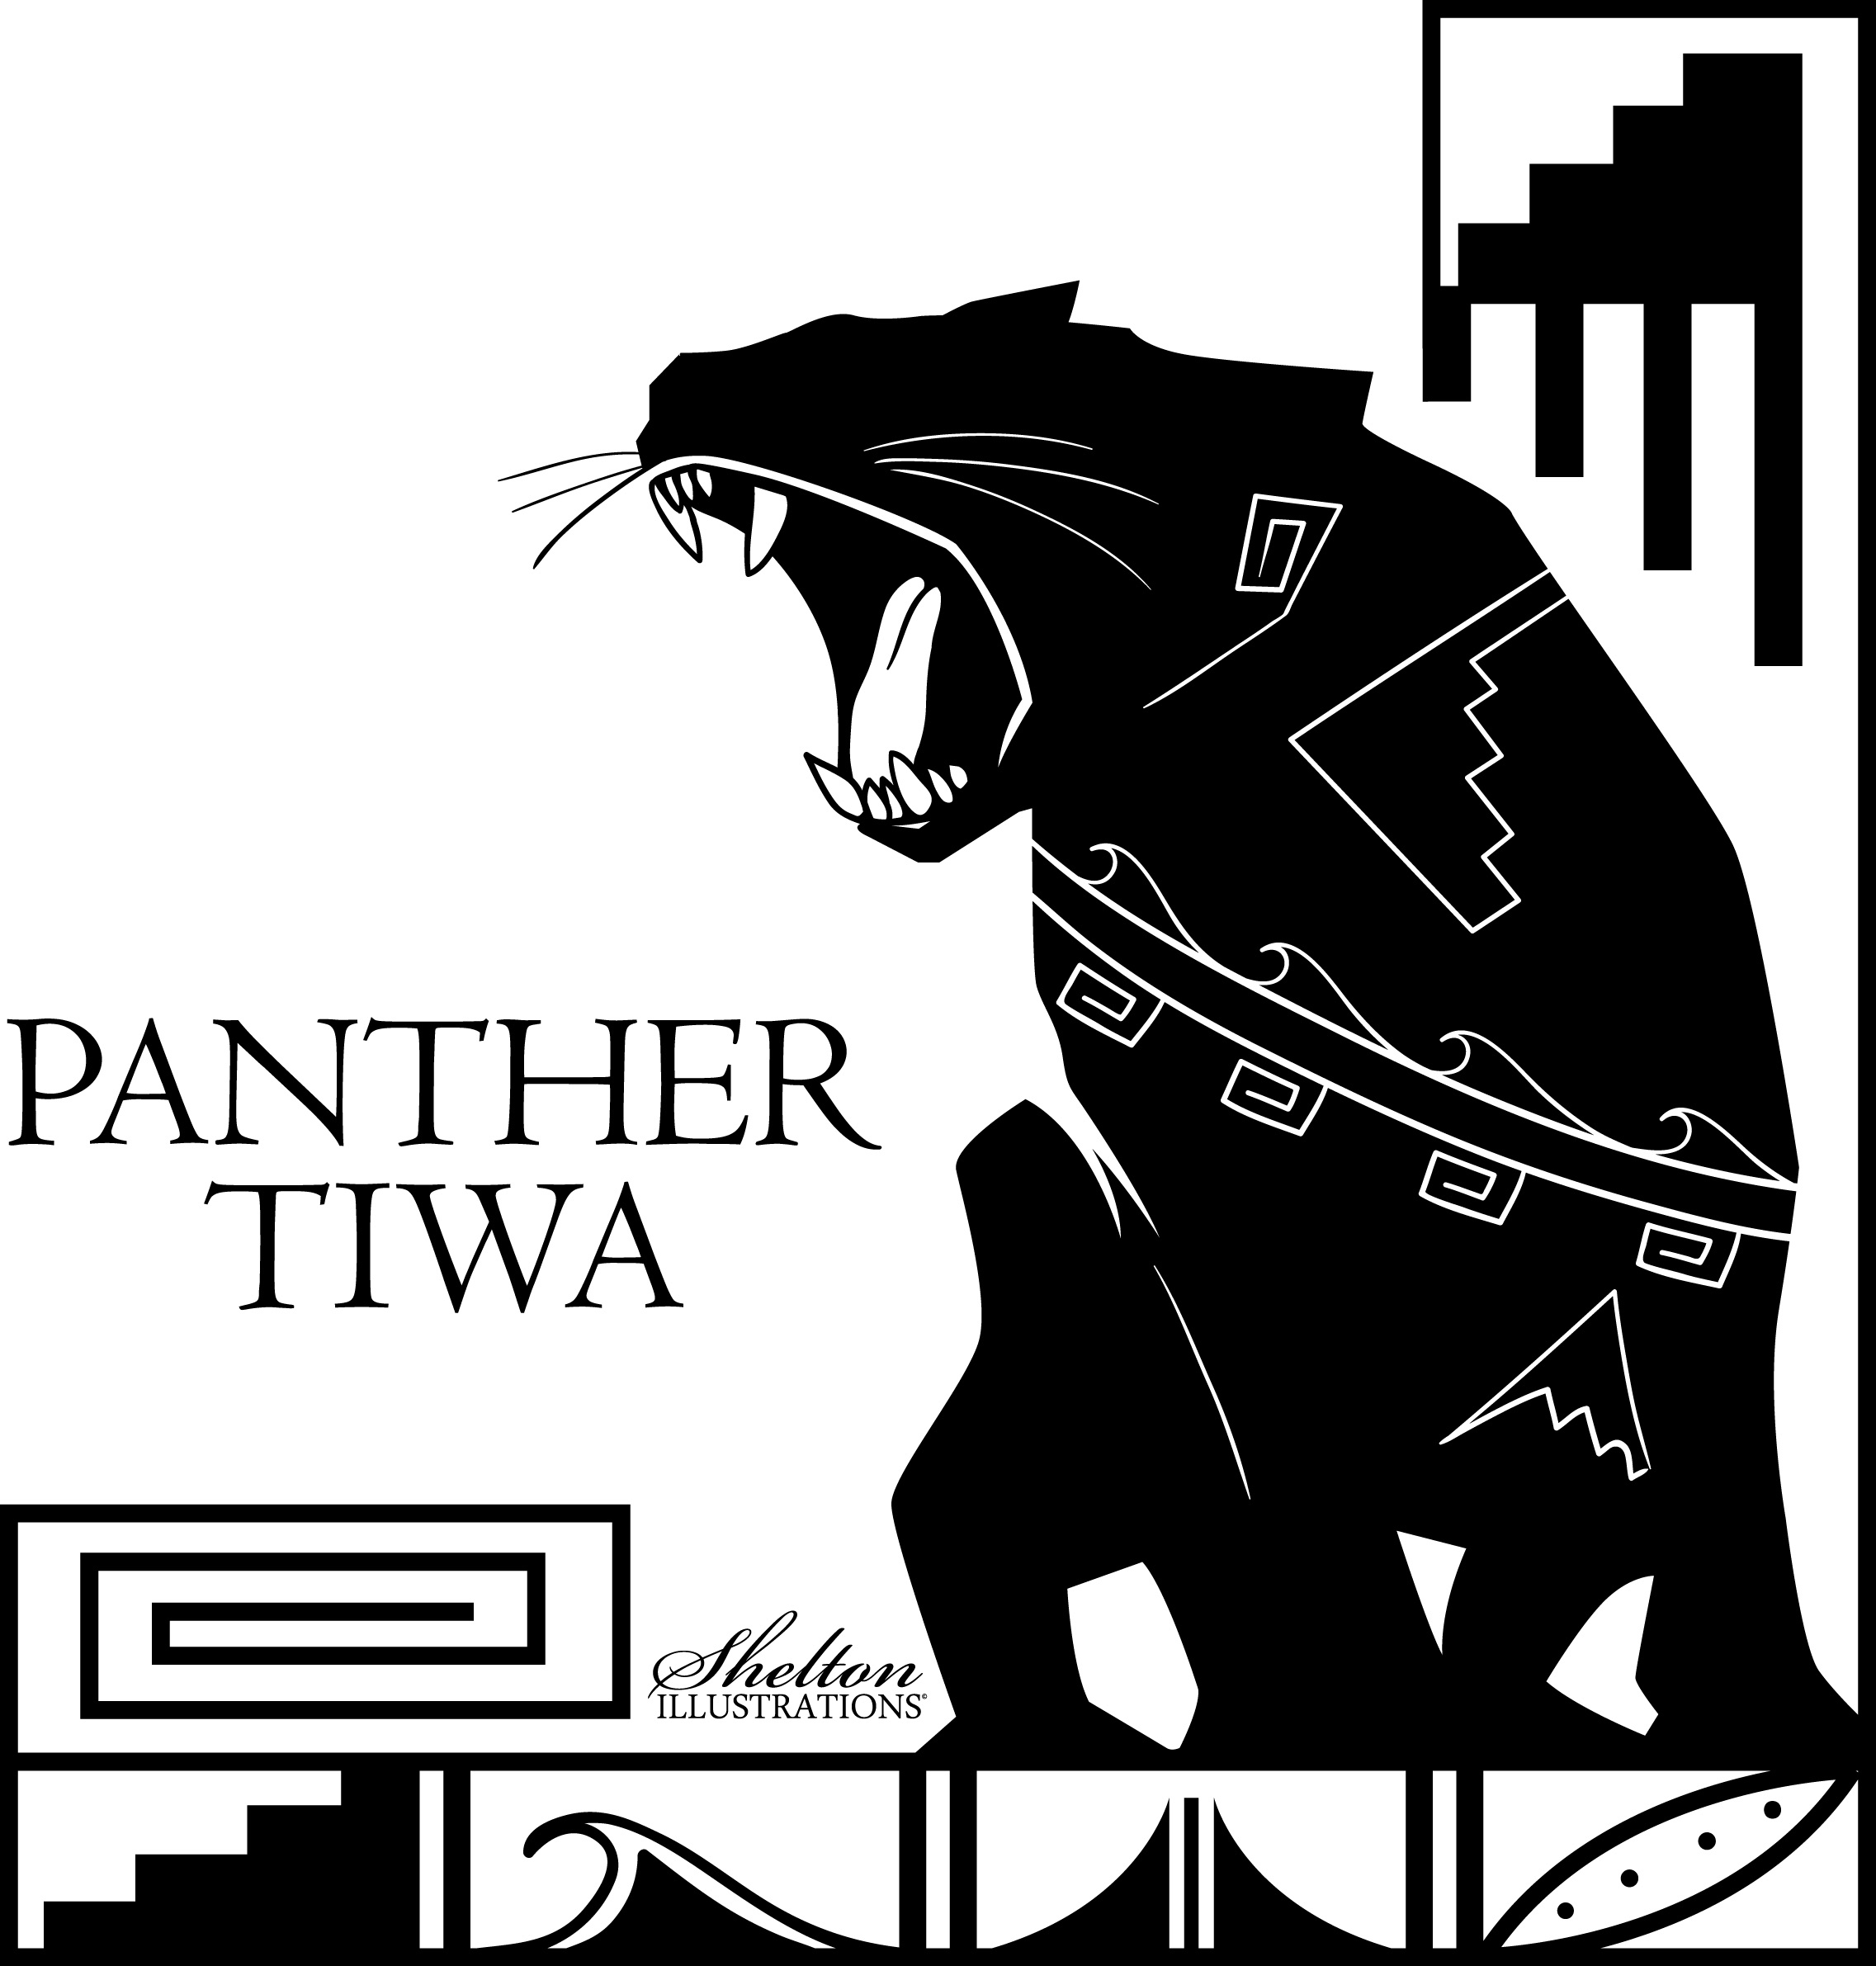 Panther-Tiwa emblem